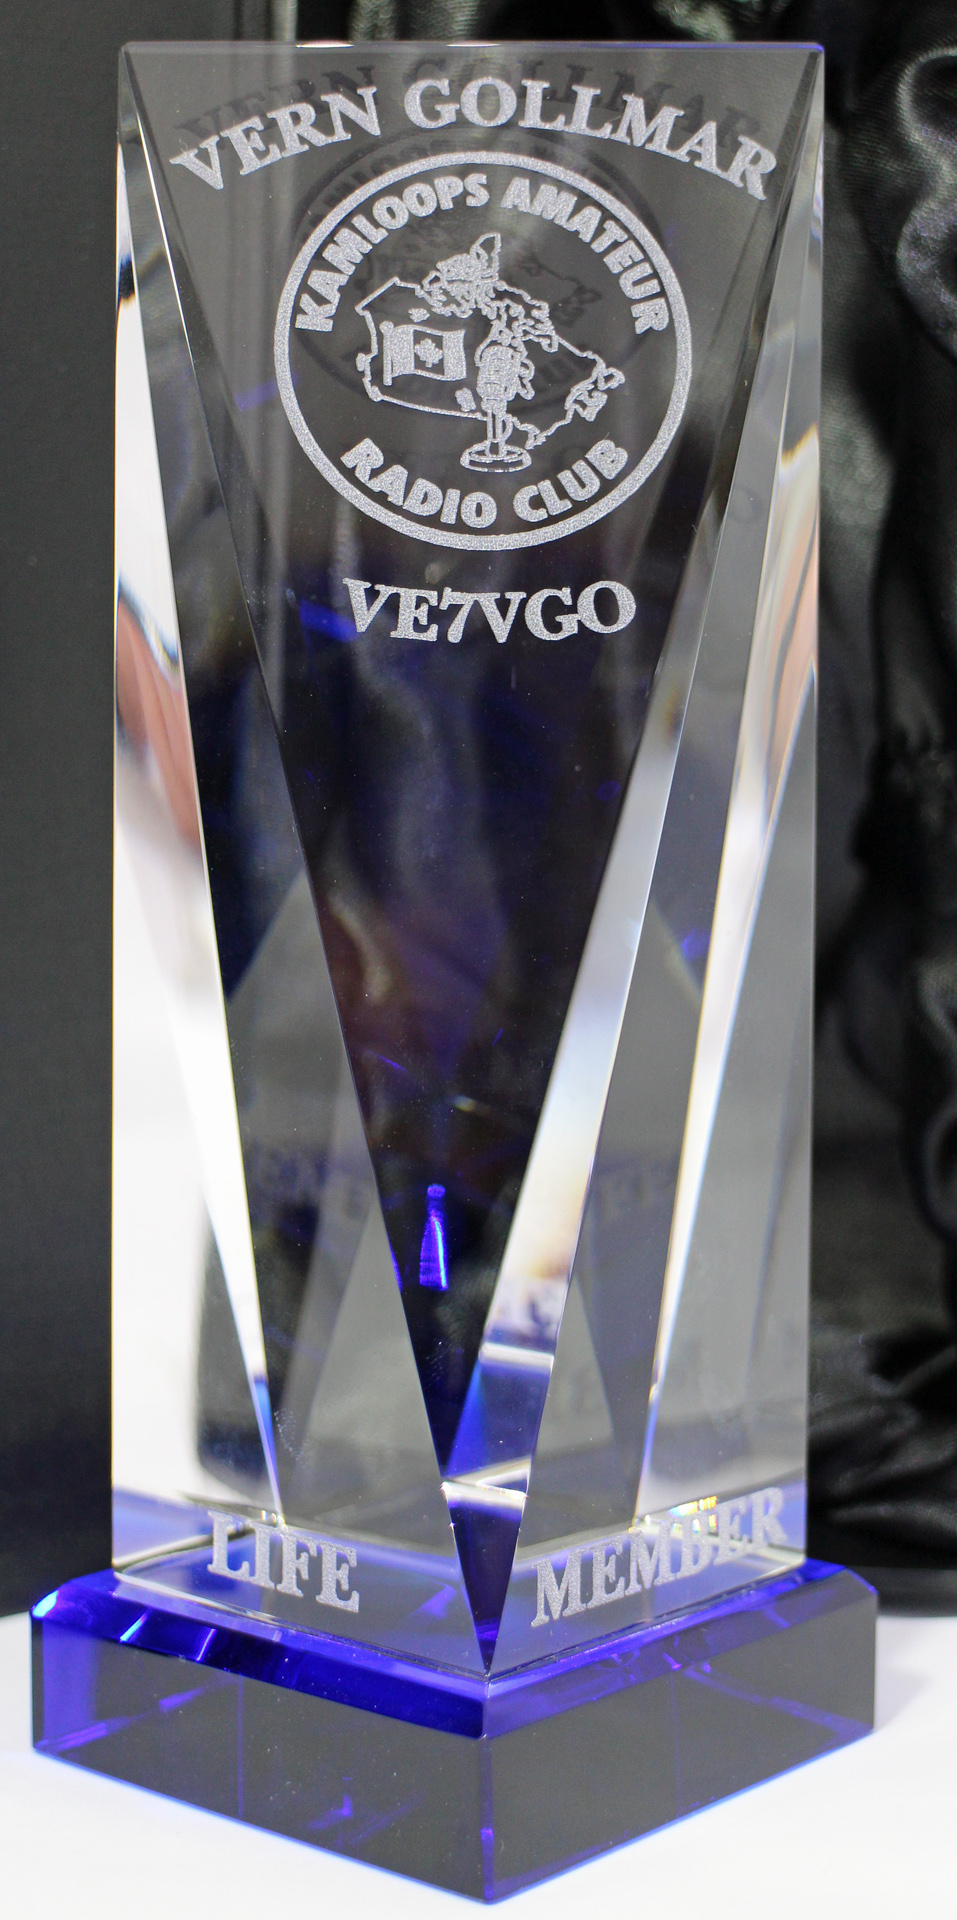 Lifetime Member Award given to Vern, VE7VGO